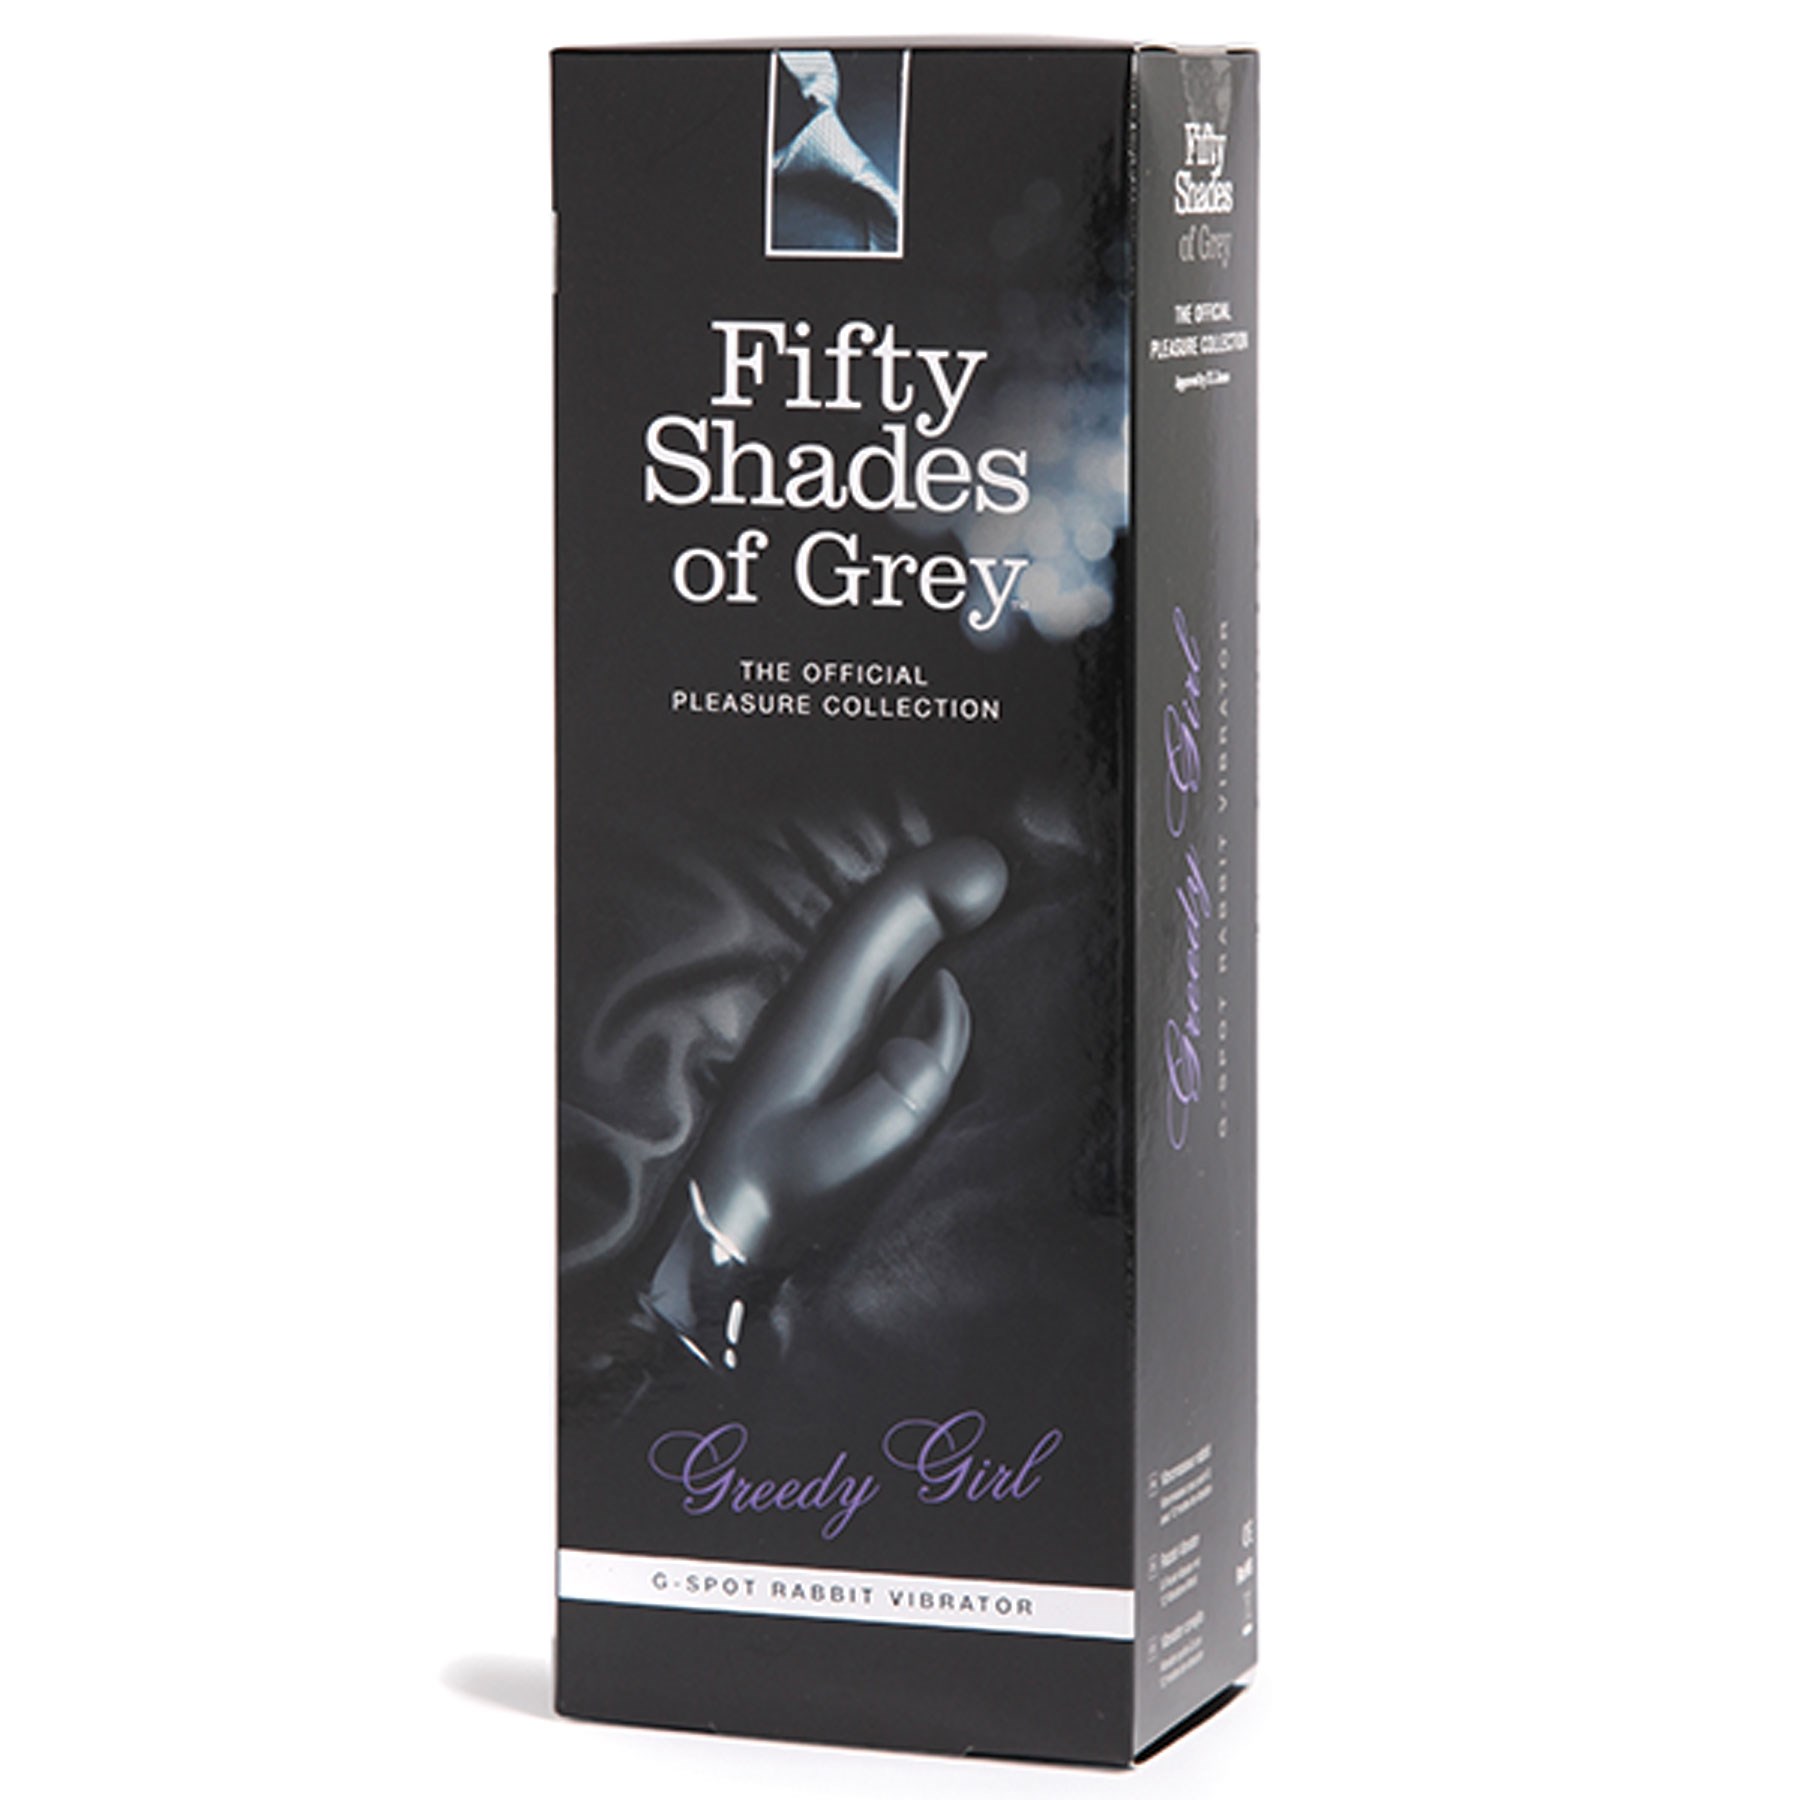 Fifty Shades of Grey Greedy Girl G-Spot Rabbit Vibrator box